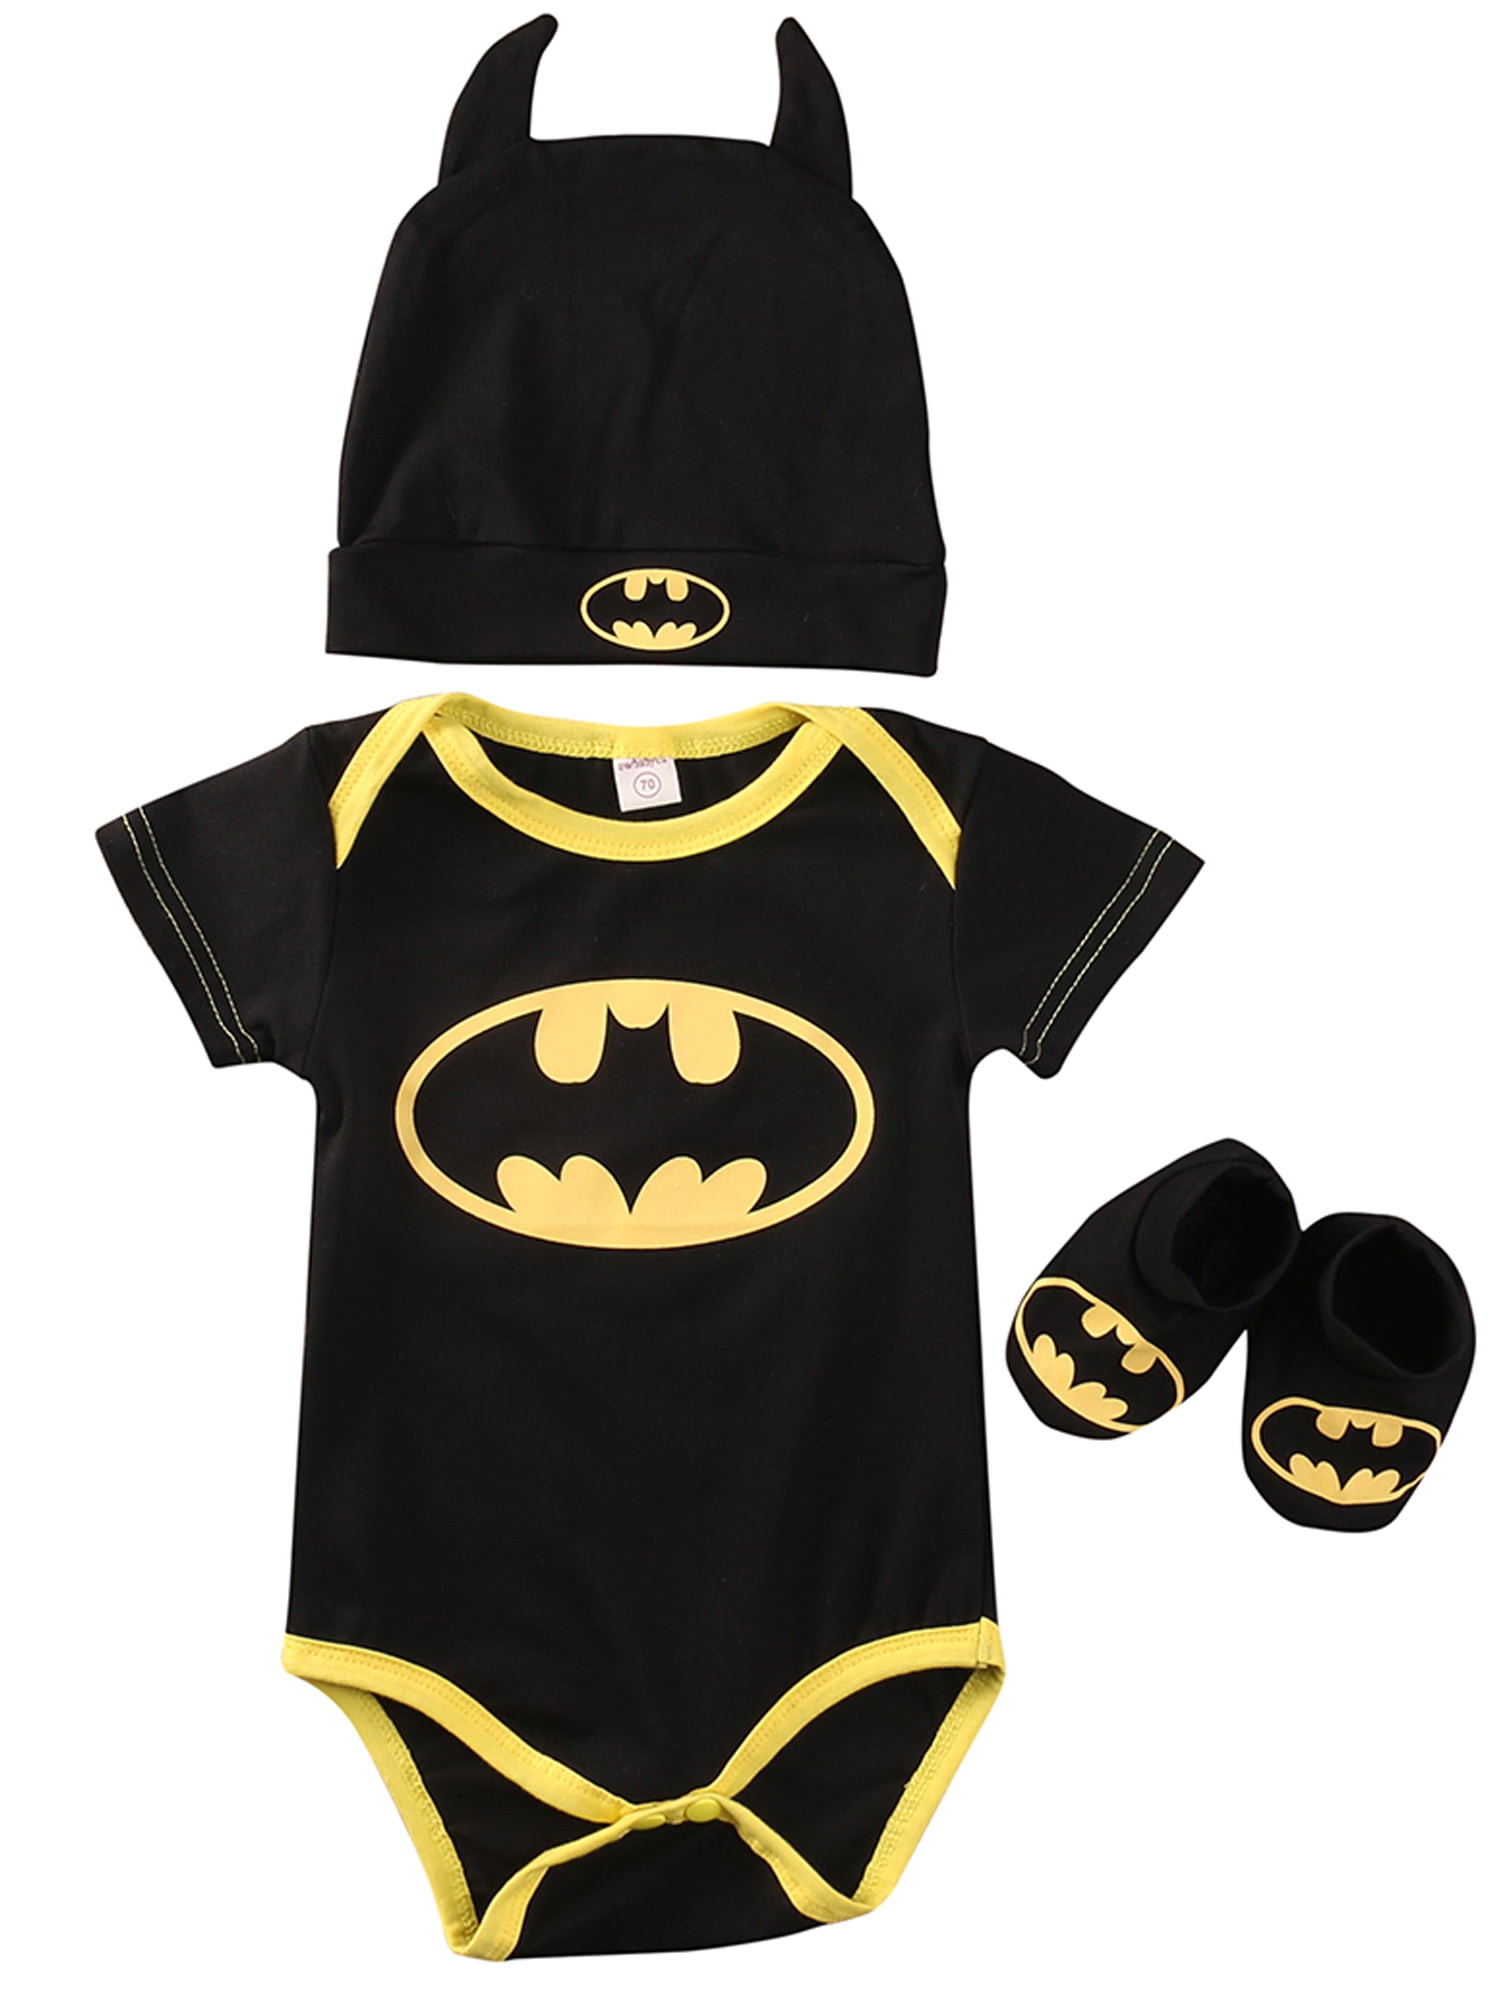 Baby Boy Batman Costume Short Sleeve Romper w/Cape size 00/0/1/2 